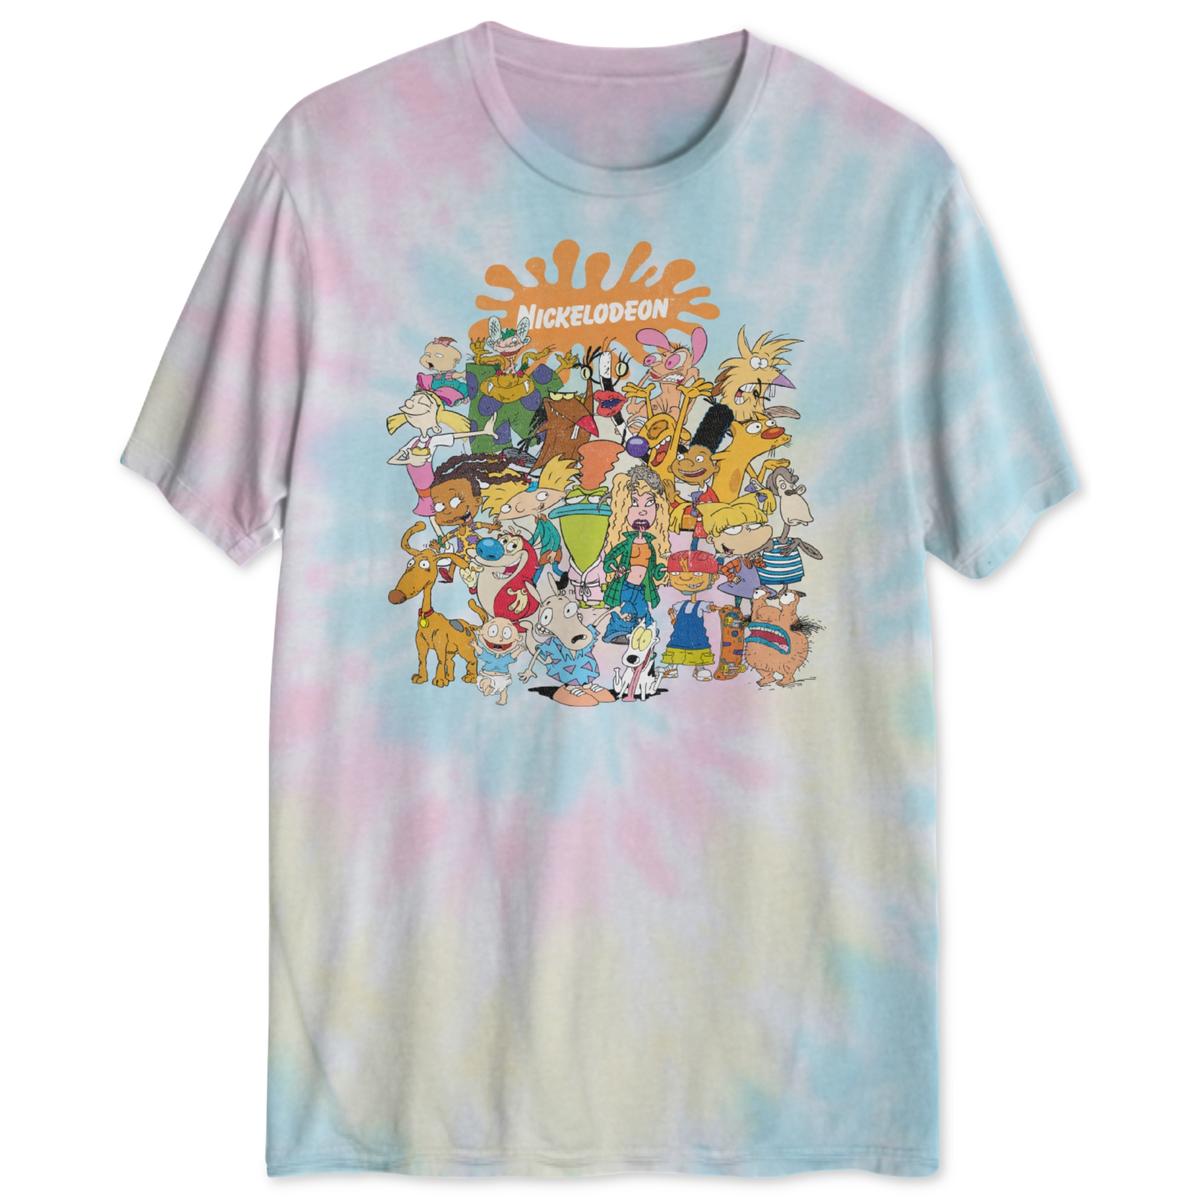 Nickelodeon Mens Blue Tie Dye Graphic Tee T-Shirt Top XL BHFO 0249 | eBay